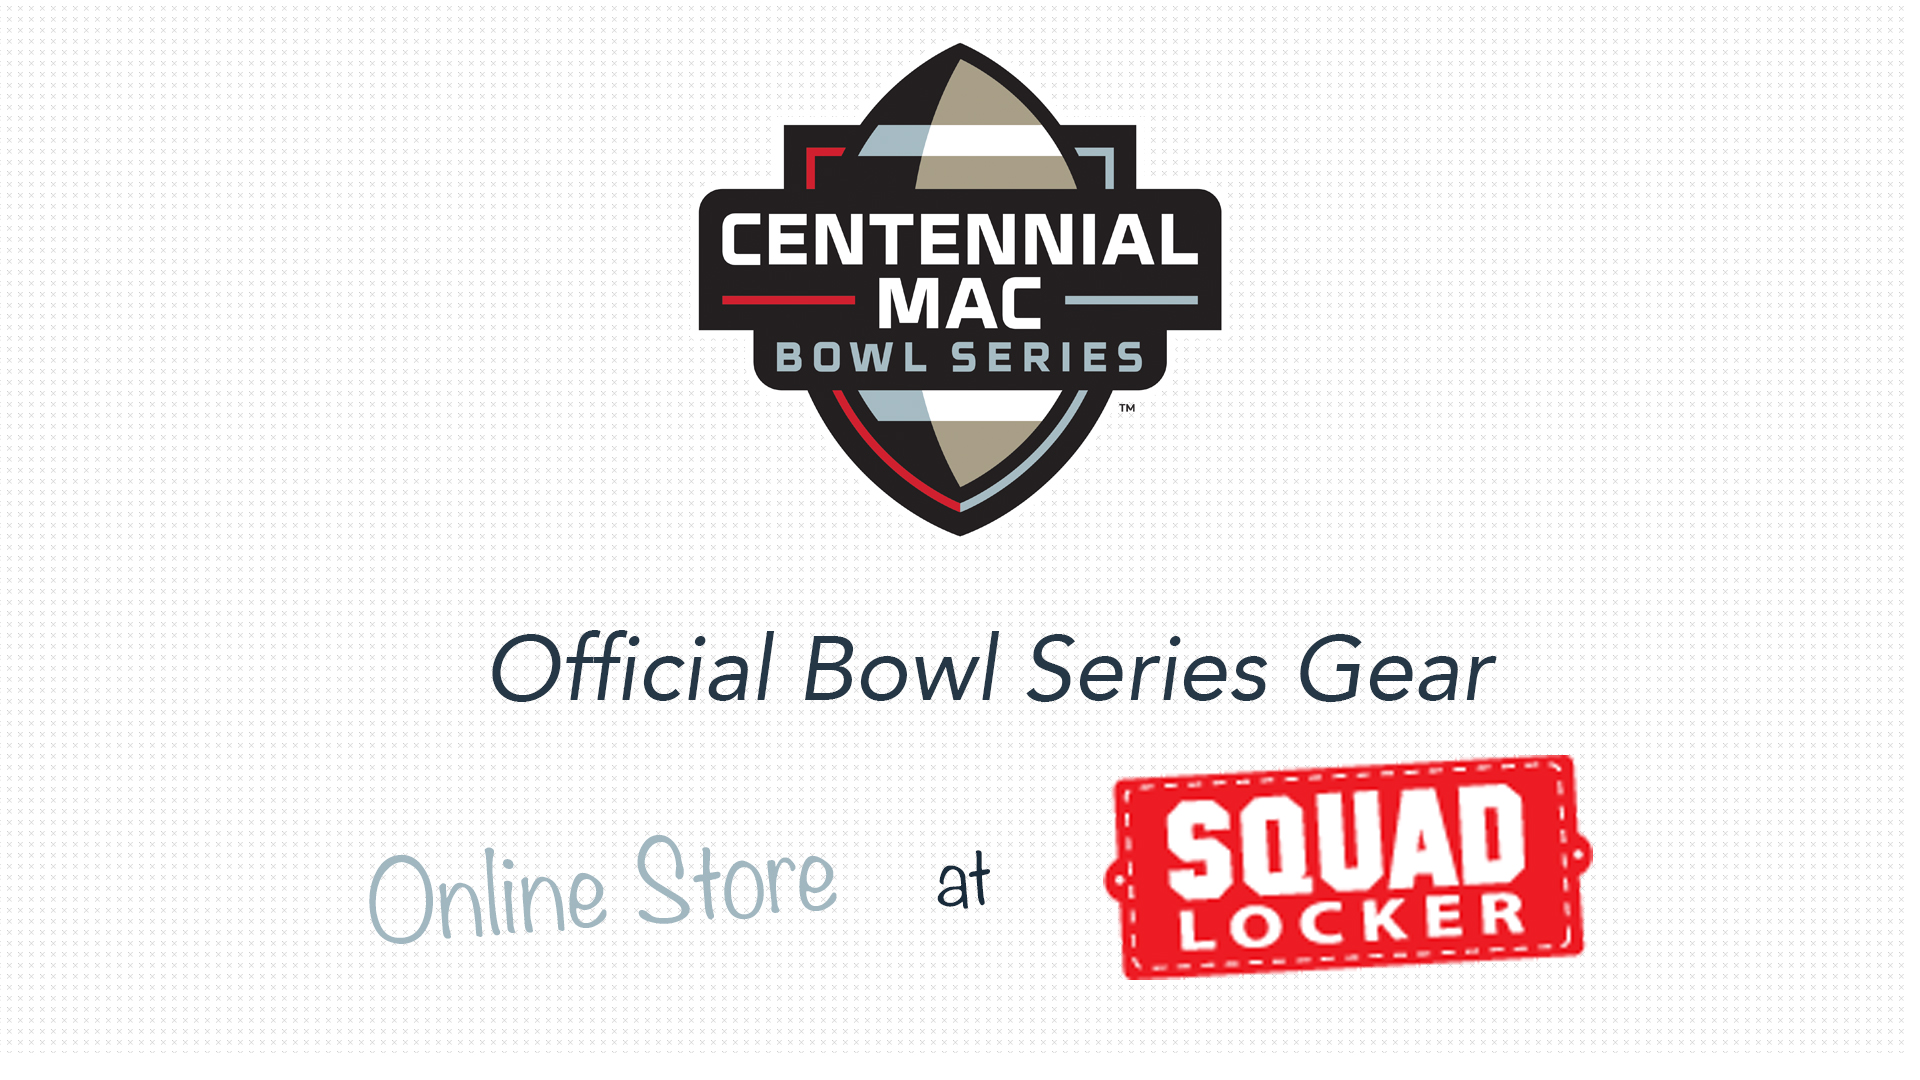 NOW OPEN! Centennial-MAC Bowl Series Online Merchandise Store with Squad Locker